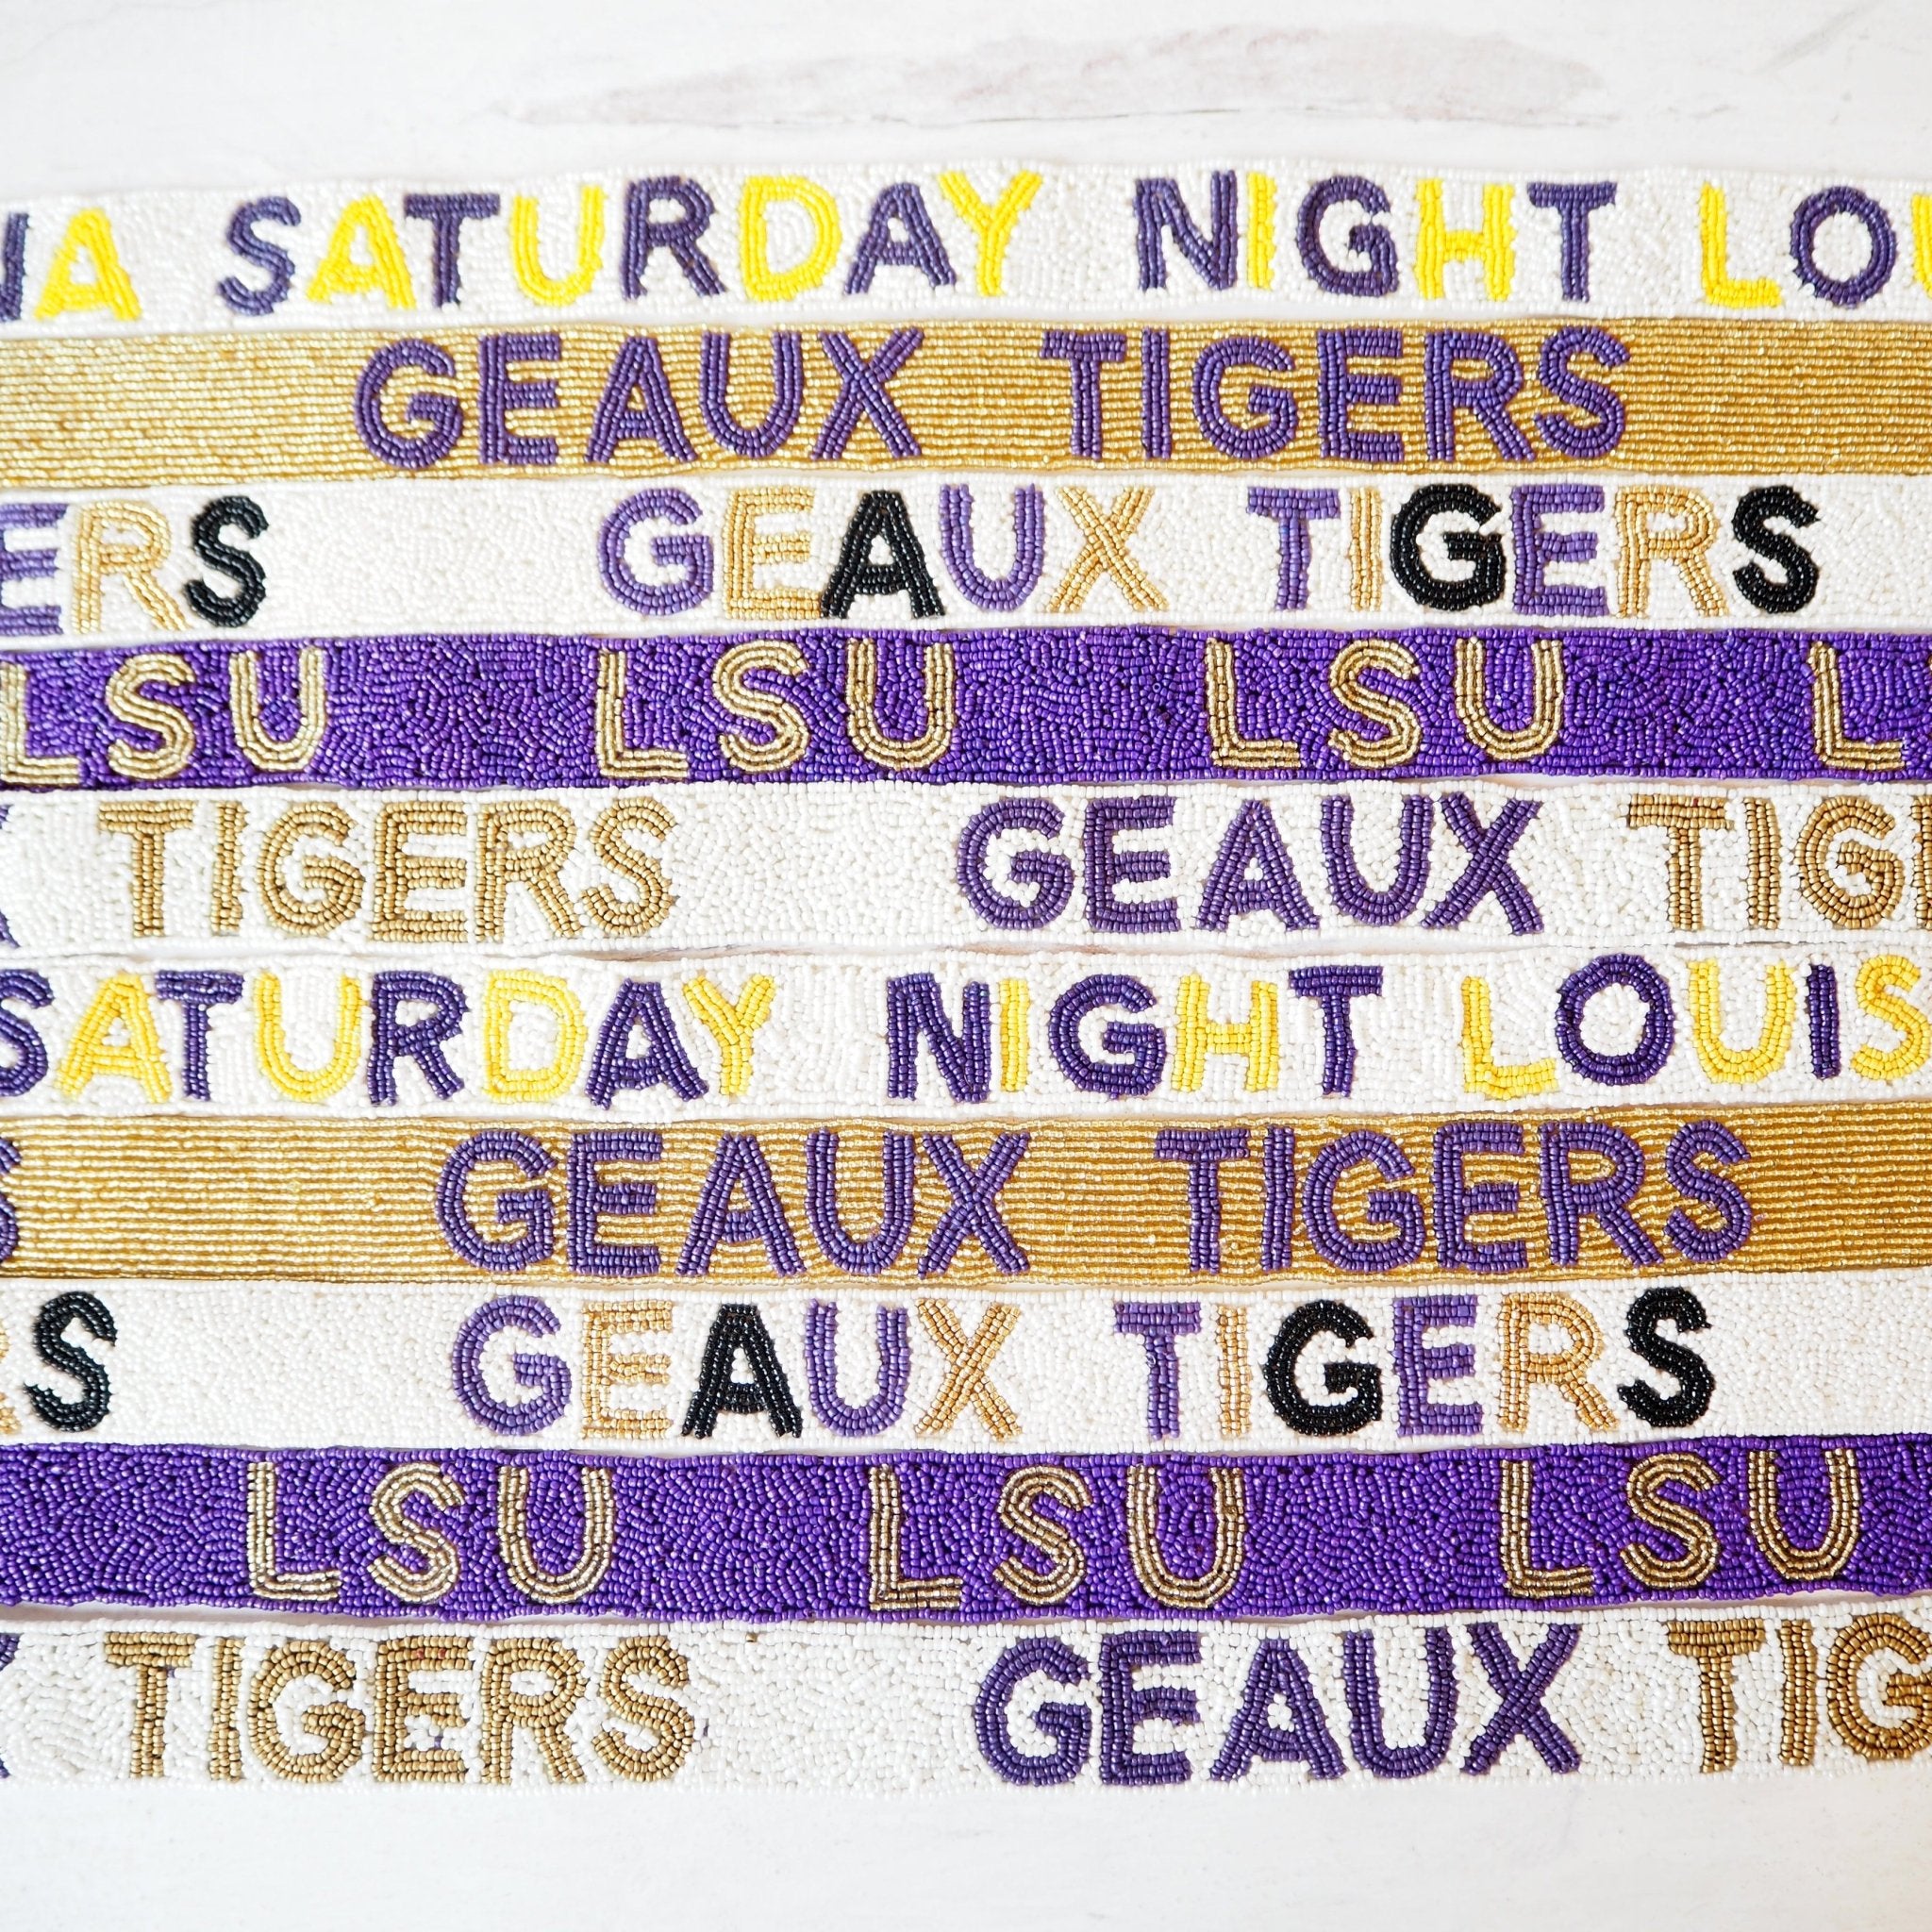 LSU Bag Strap Geaux Tigers Bag Strap Louisiana State 